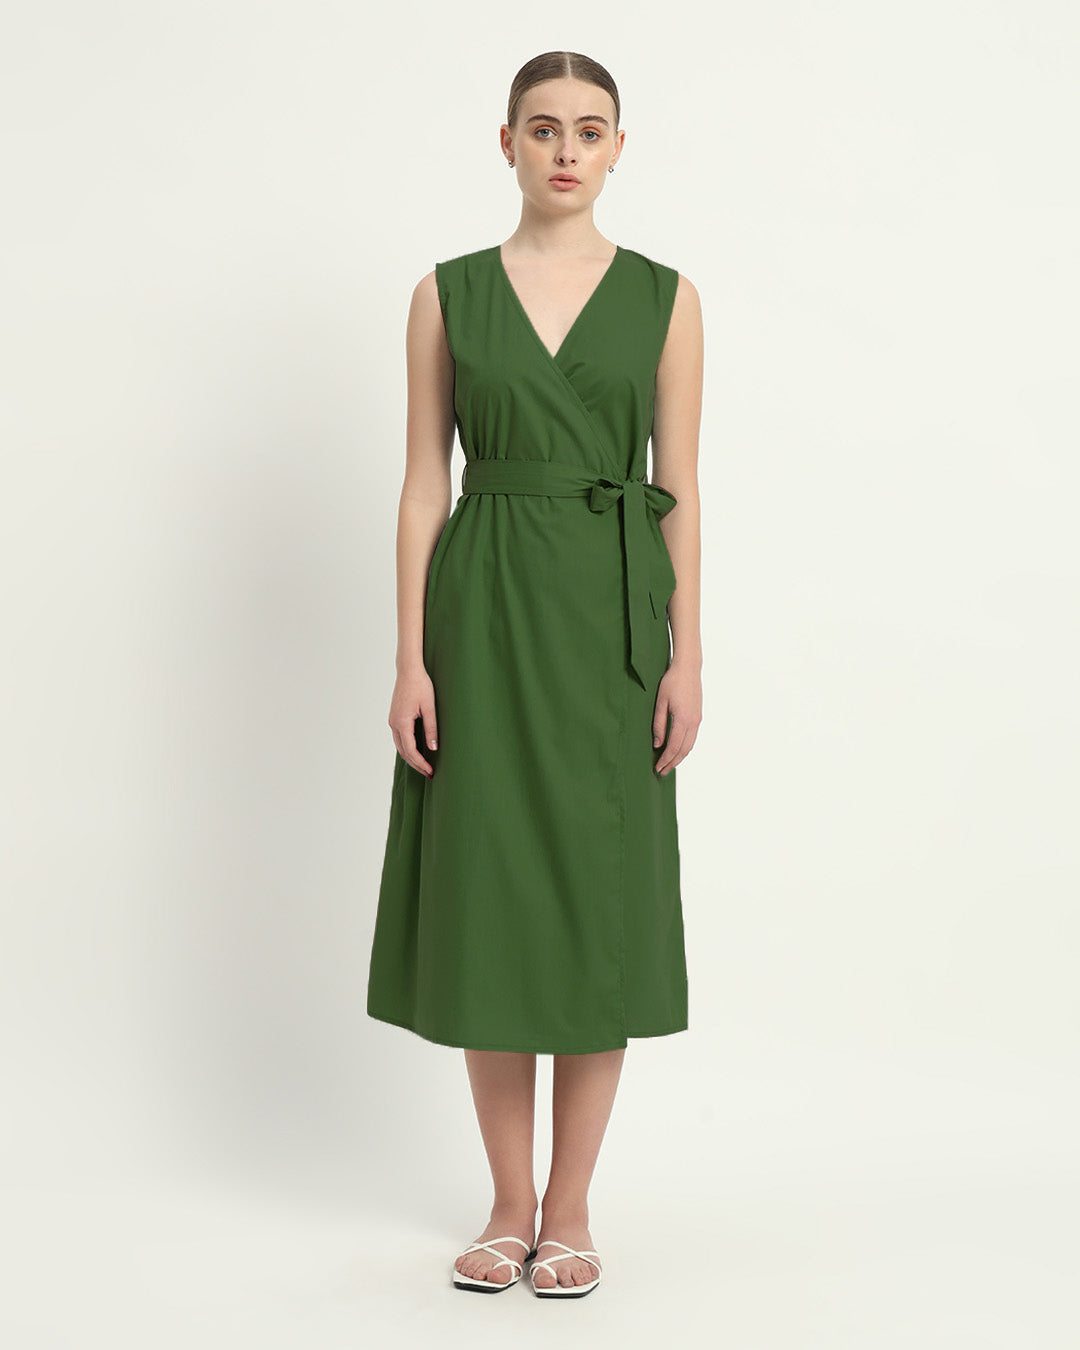 The Windsor Emerald Cotton Dress